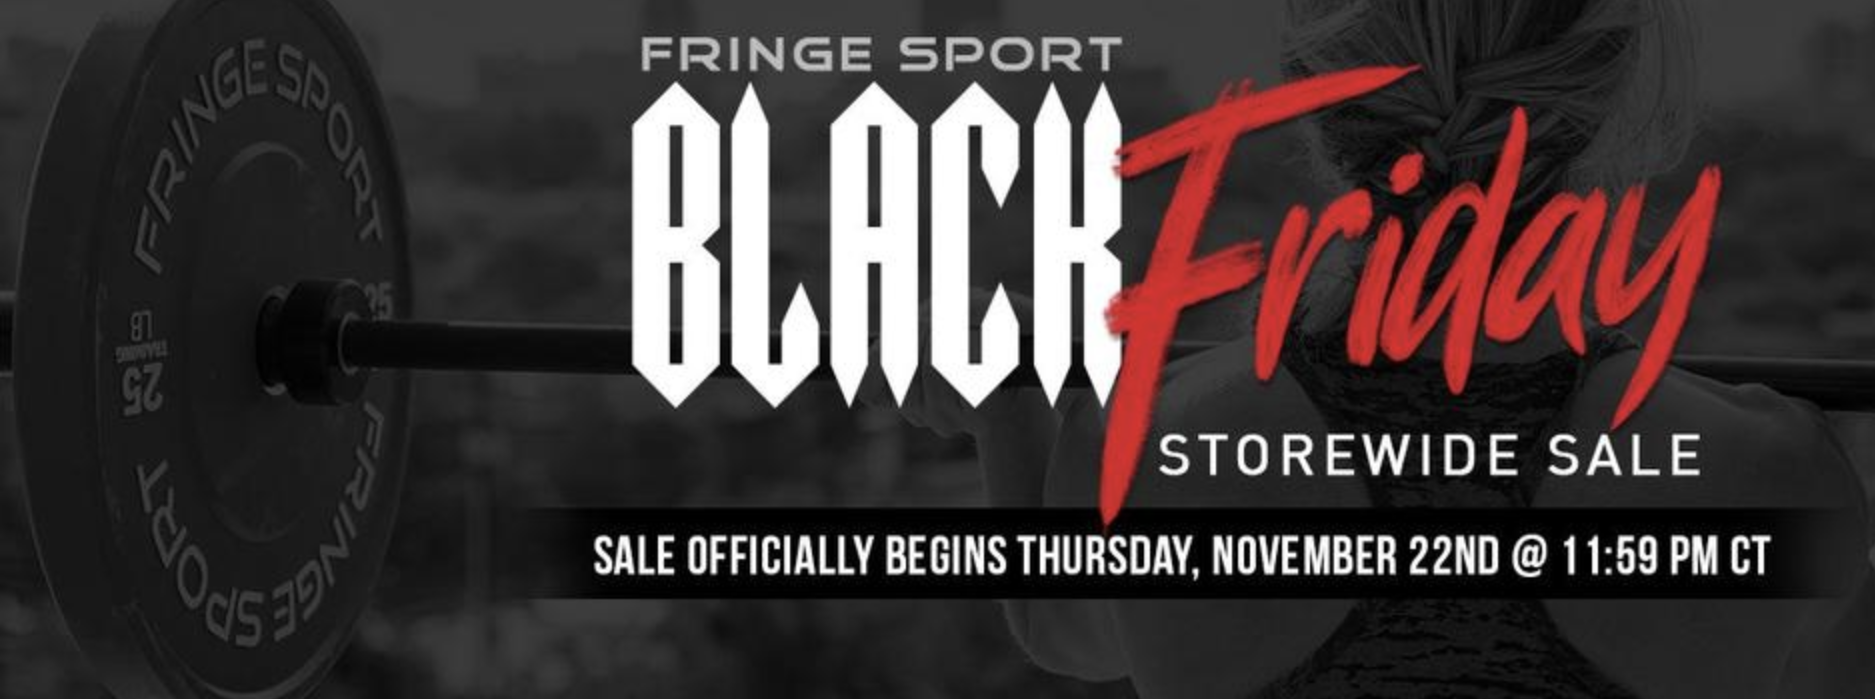 fringe-sport-black-friday